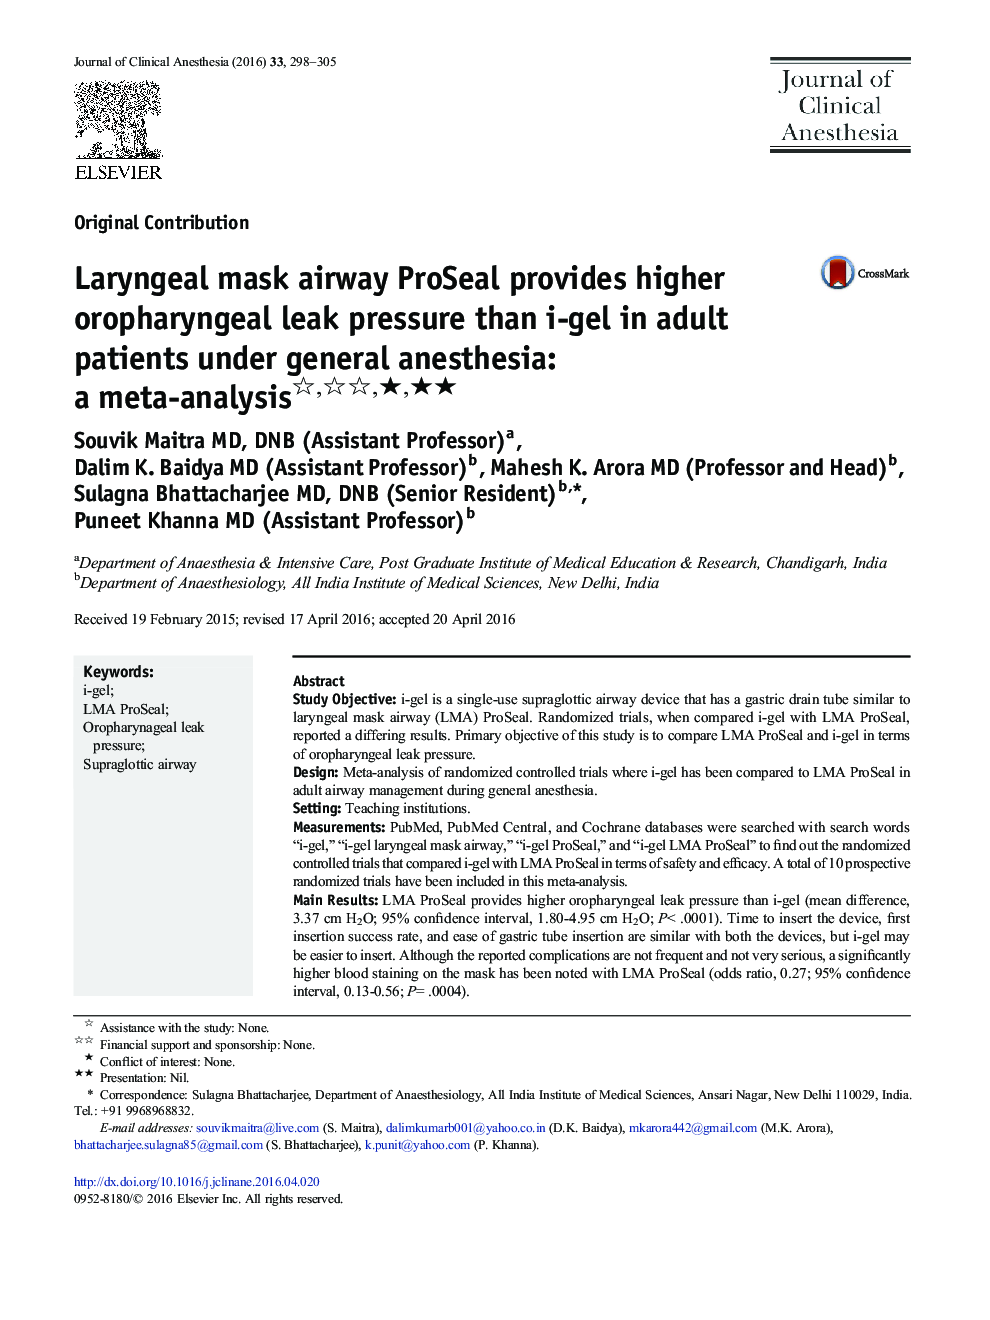 Laryngeal mask airway ProSeal provides higher oropharyngeal leak pressure than i-gel in adult patients under general anesthesia: a meta-analysis ★★★